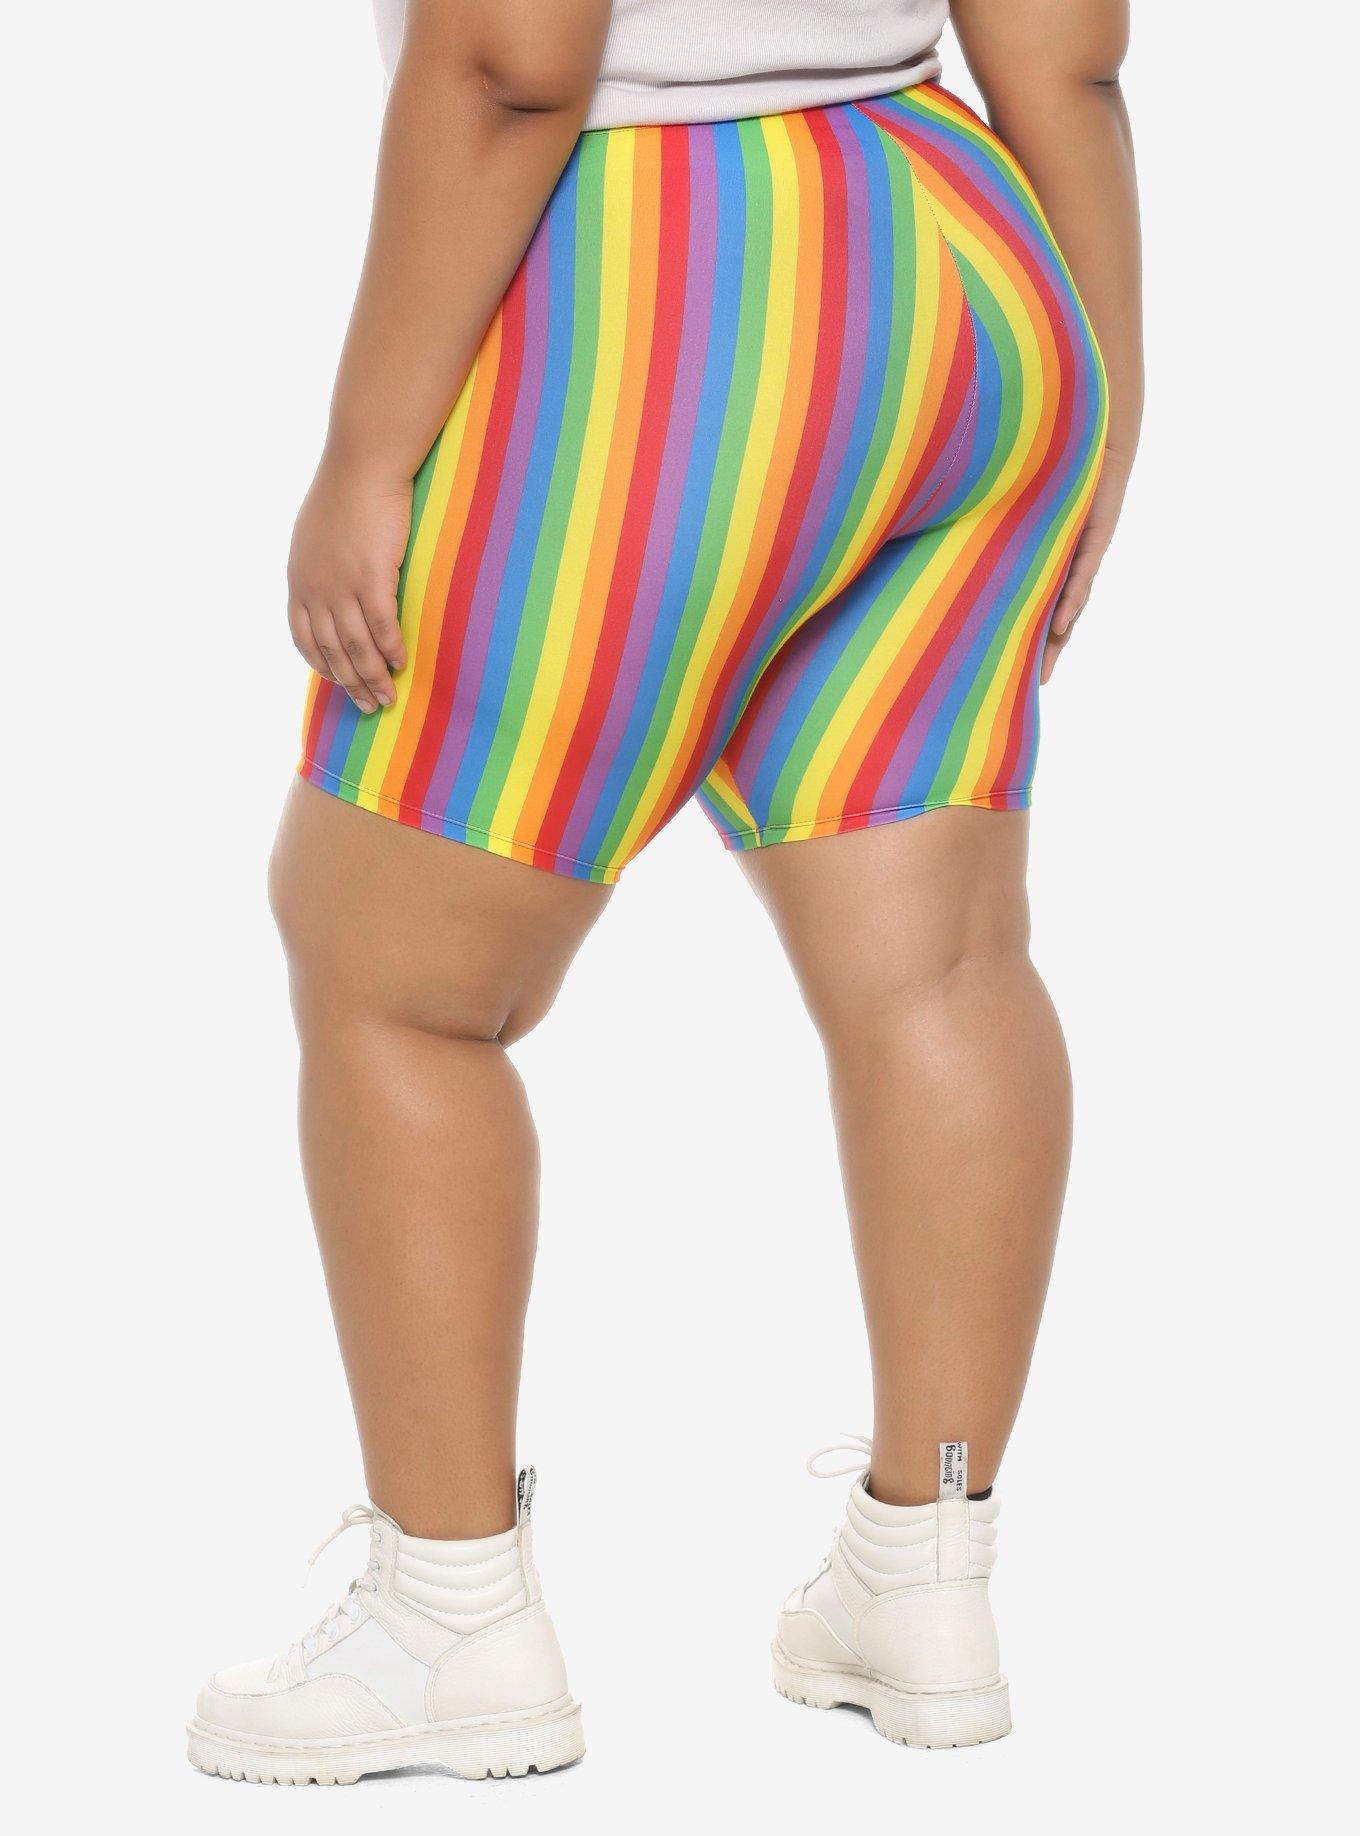 Rainbow Girls Bike Shorts Plus Size, RAINBOW, alternate